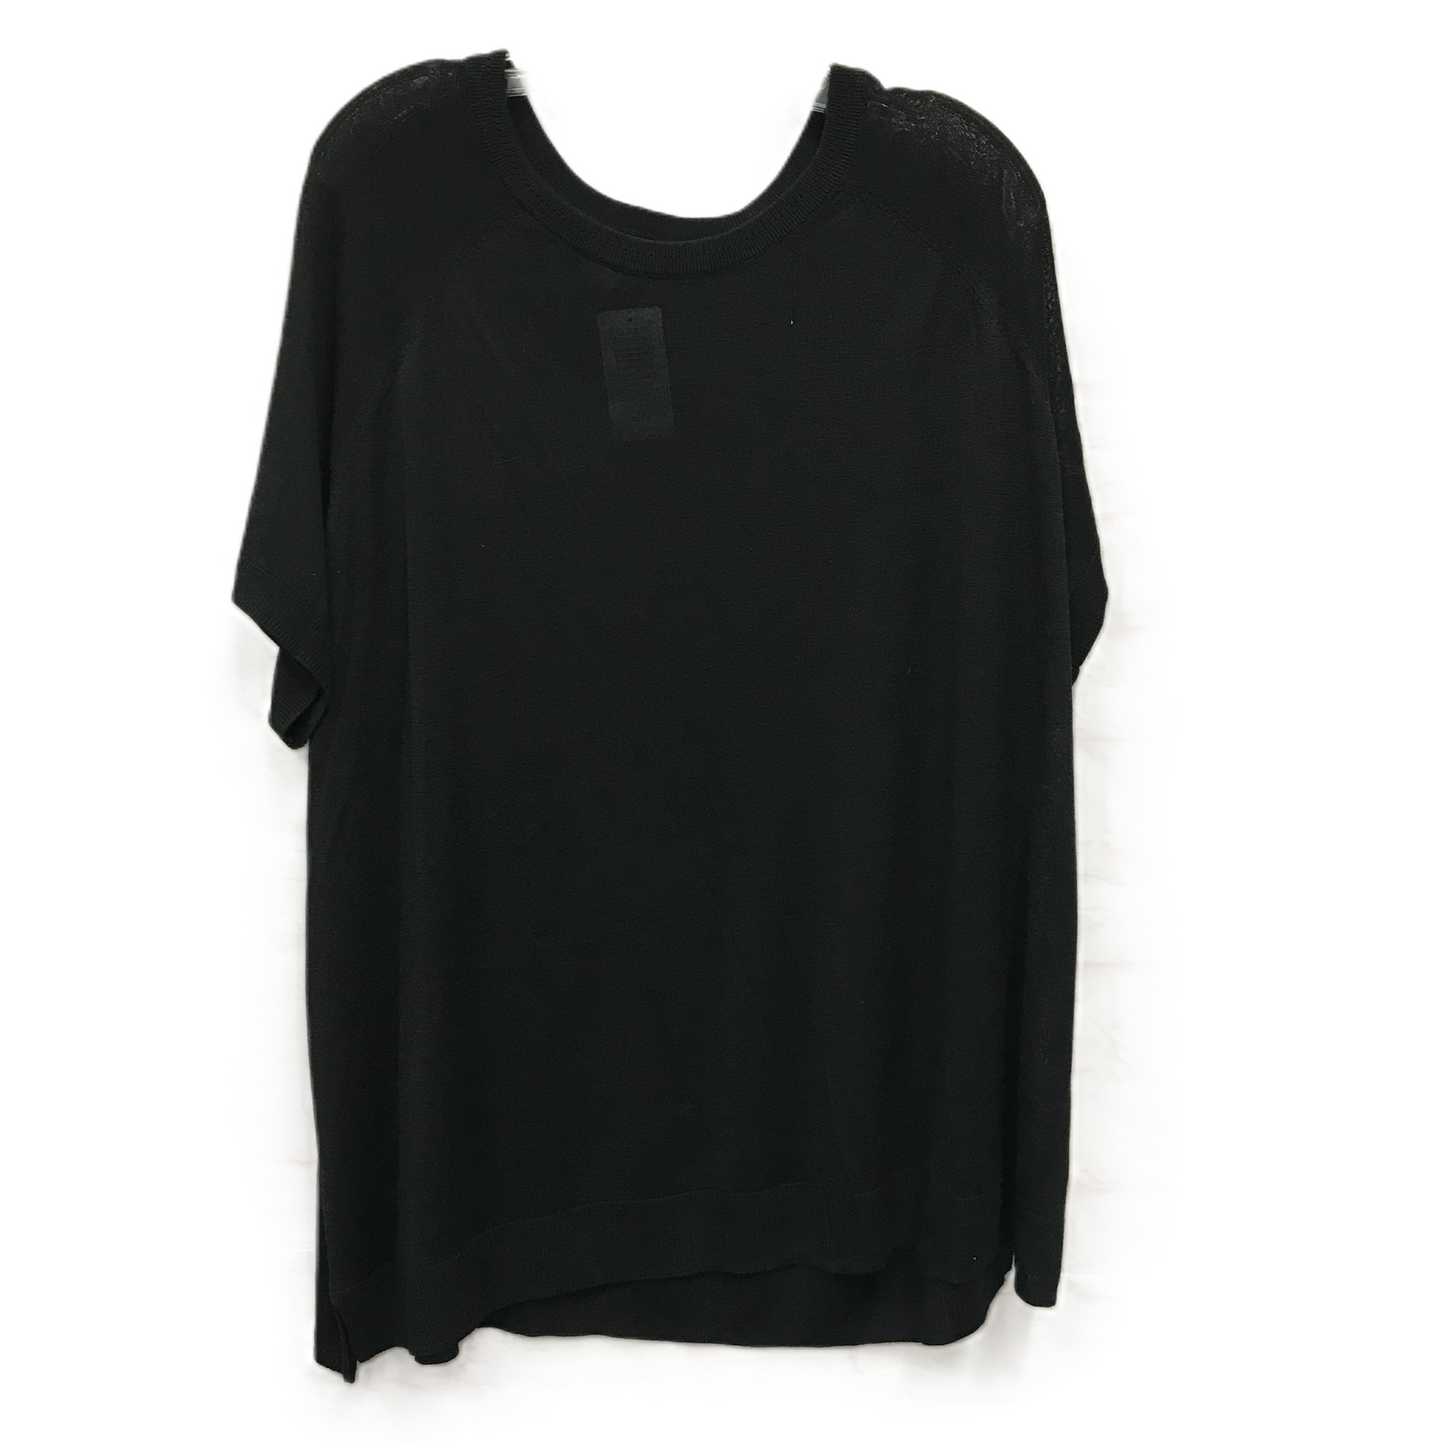 Black Top Short Sleeve By Torrid, Size: 3x